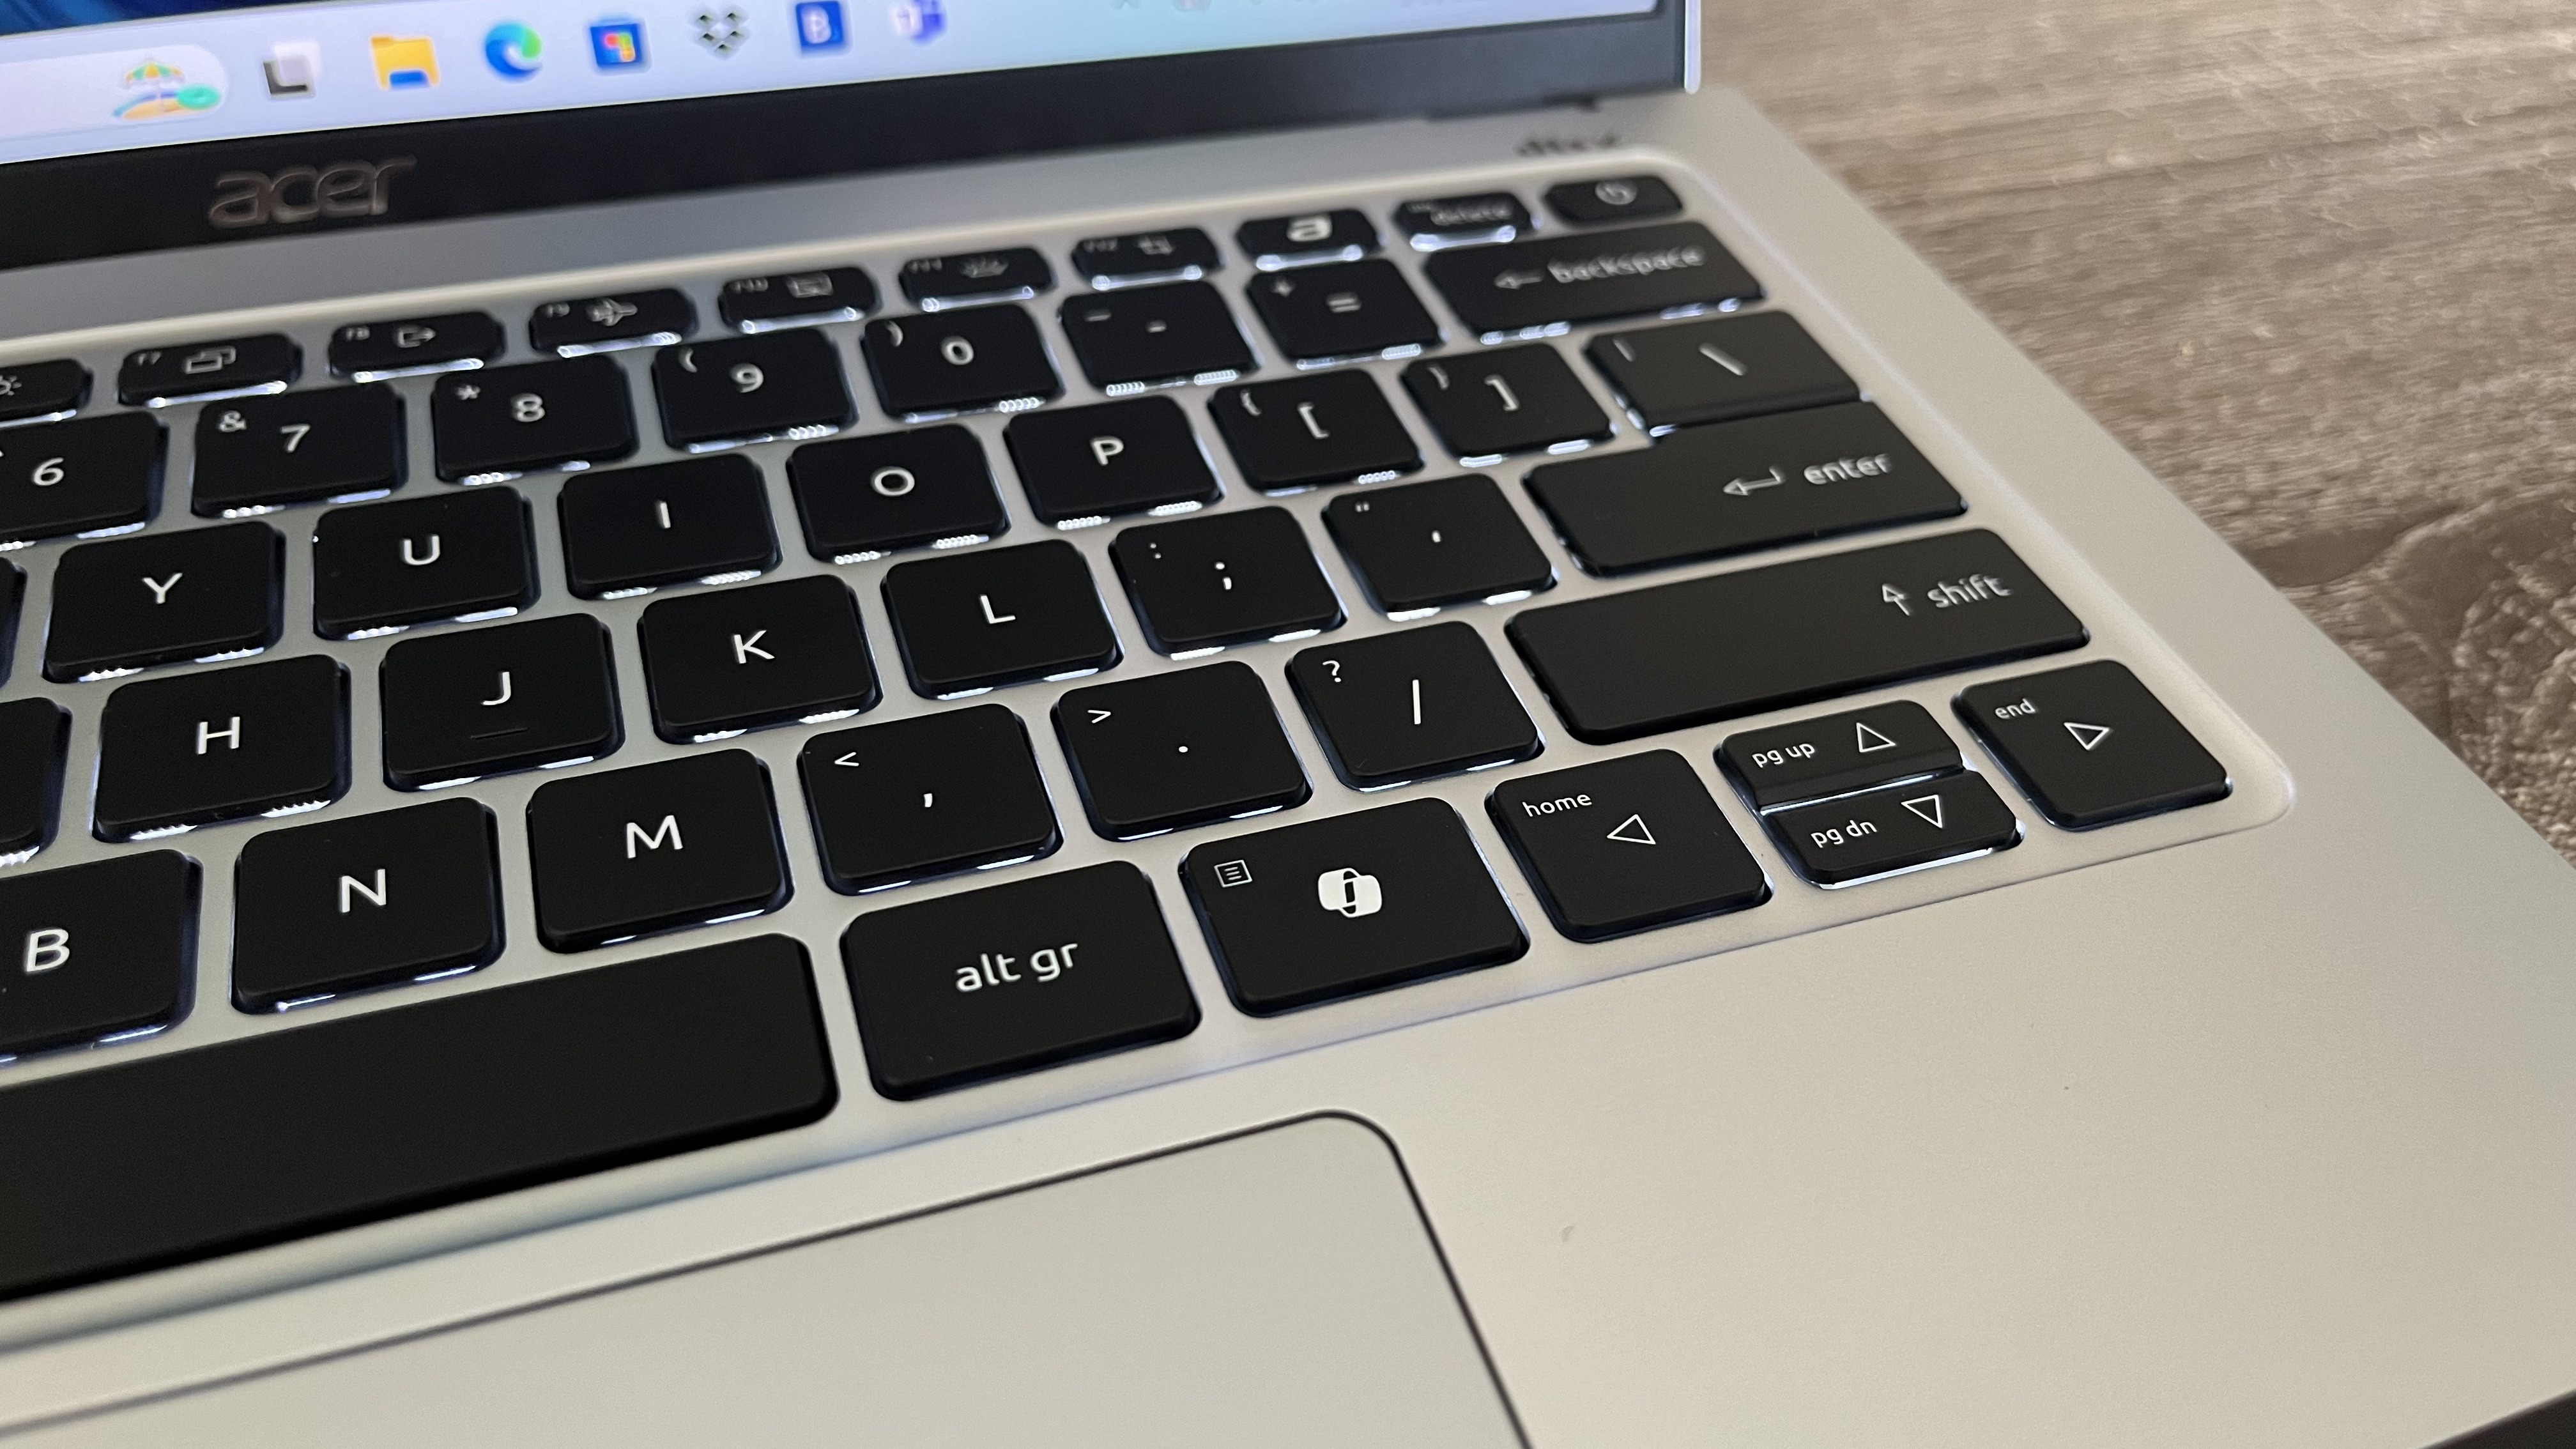 Acer Swift laptop showing the Copilot key